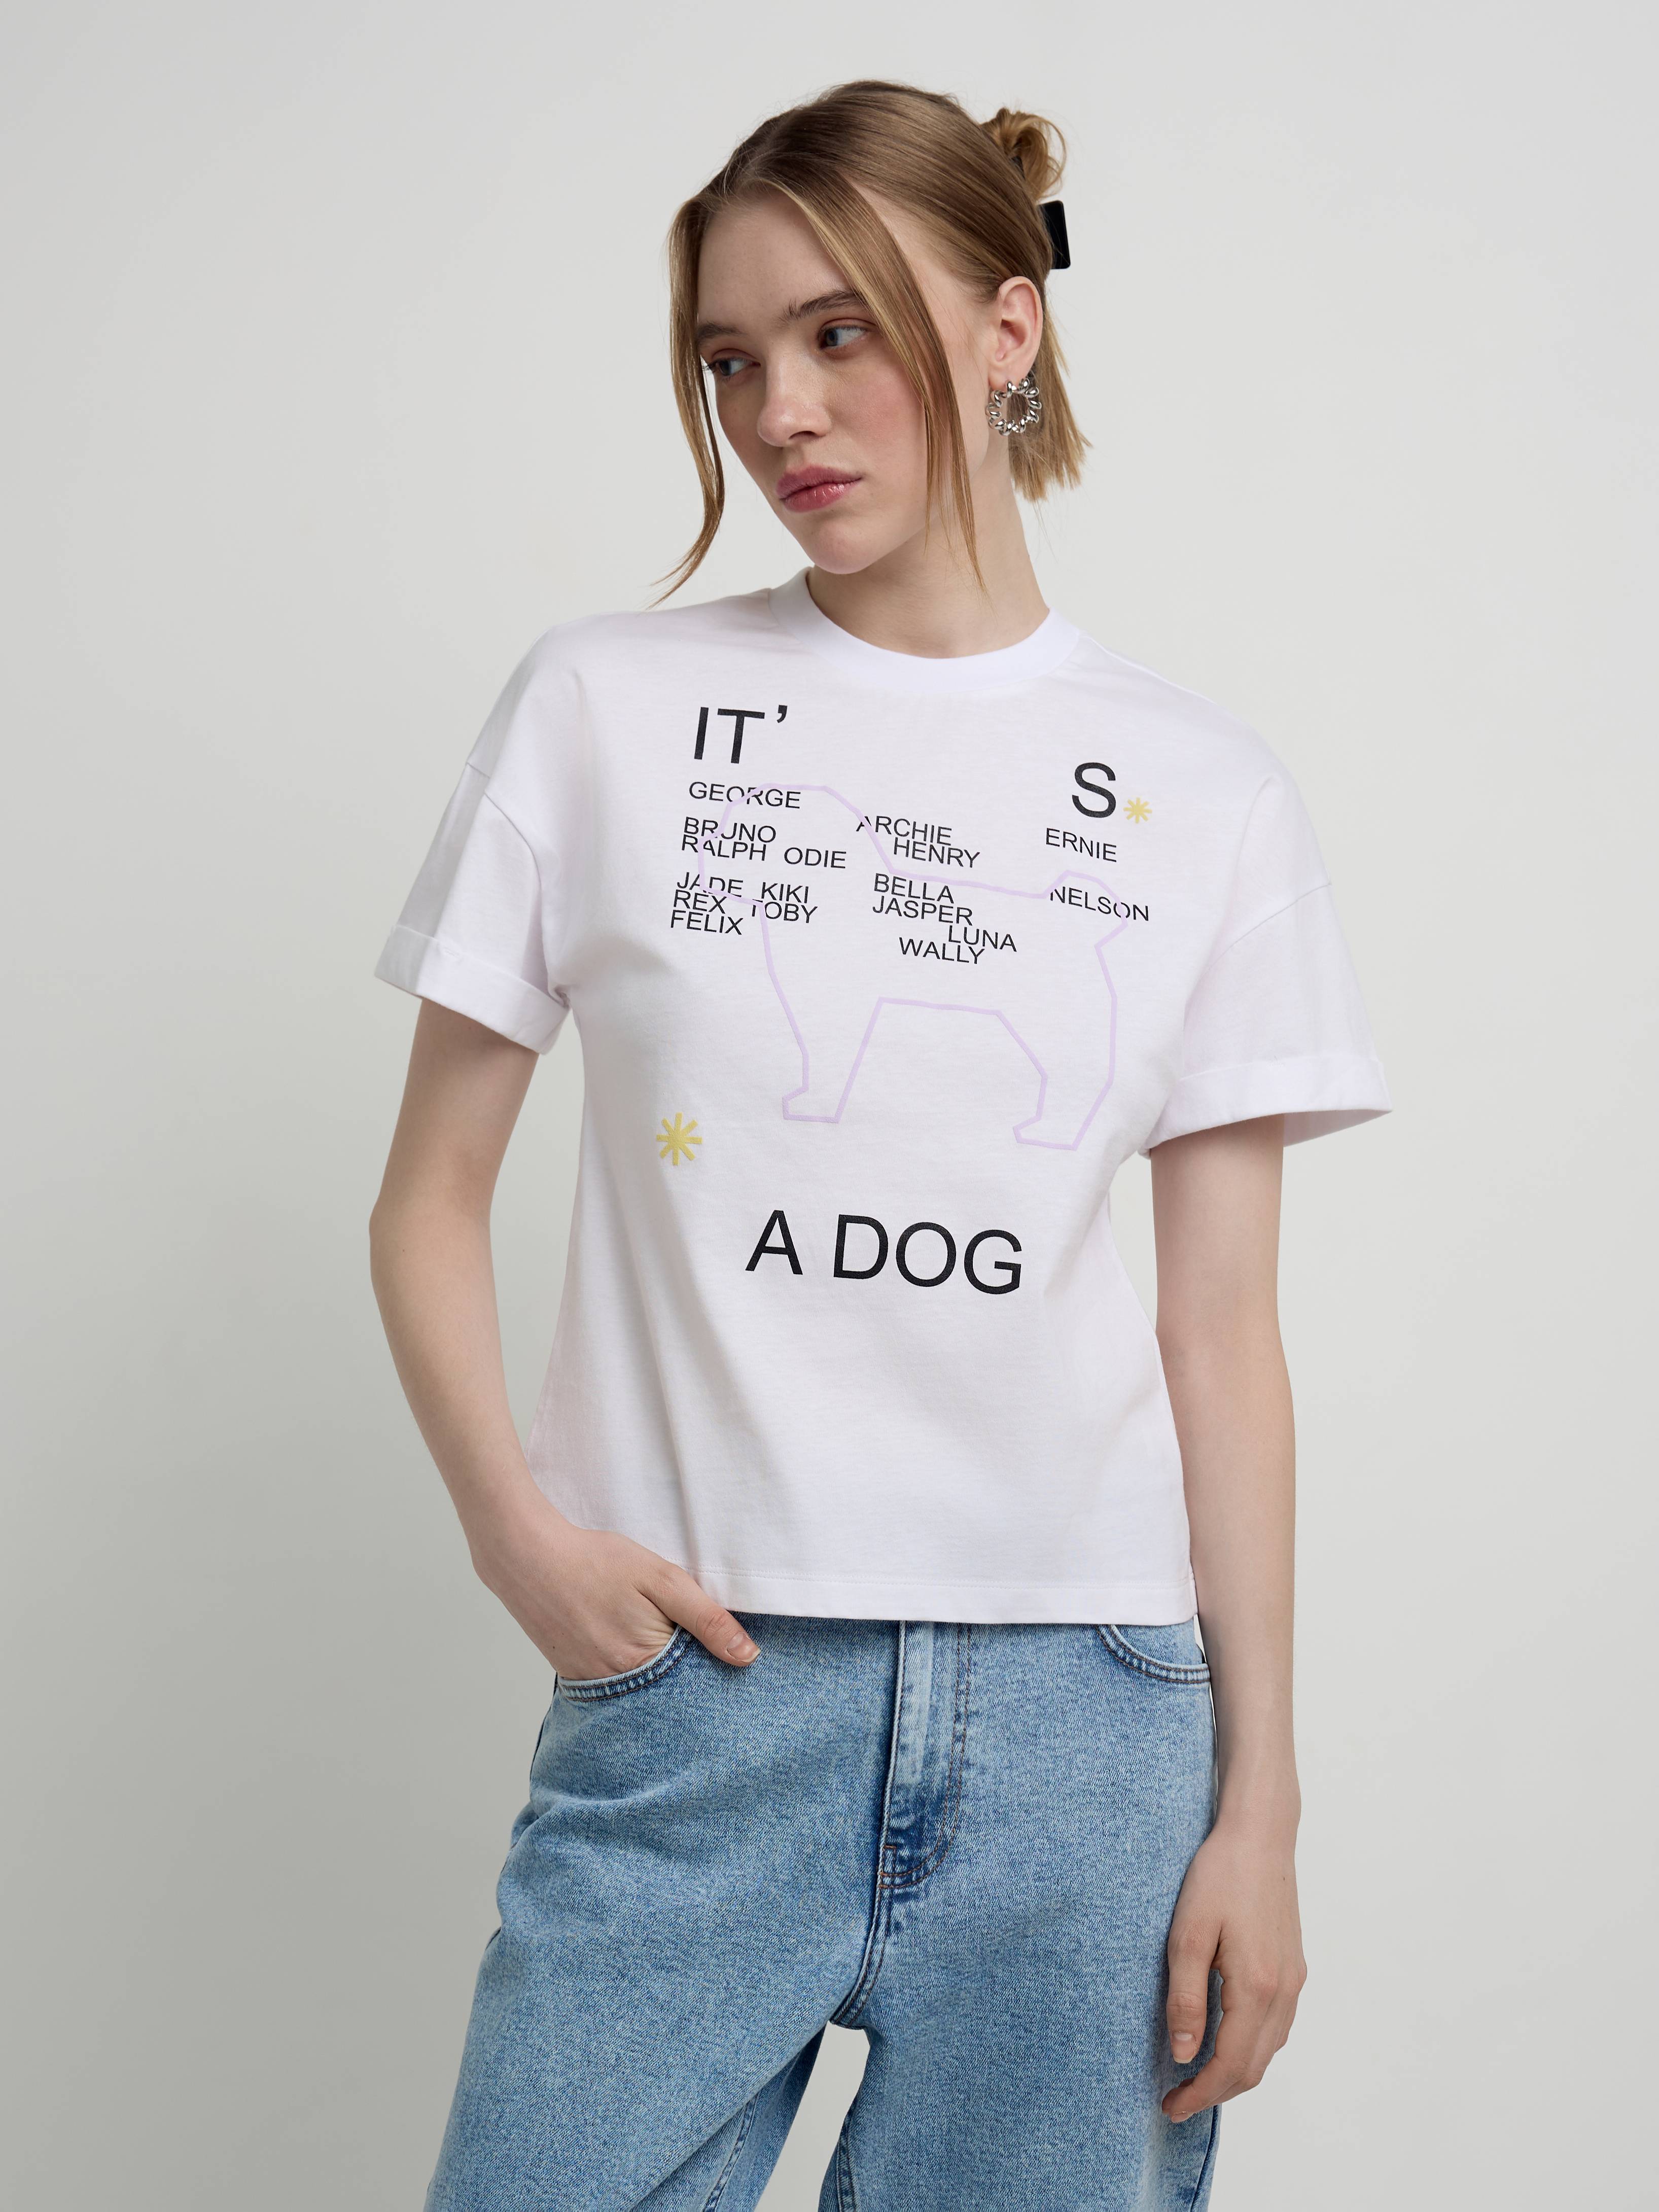 Свободная футболка с манжетами и рисунком «It’s a dog» LD 2113 Conte ⭐️, цвет white, размер 170-100/xl - фото 1